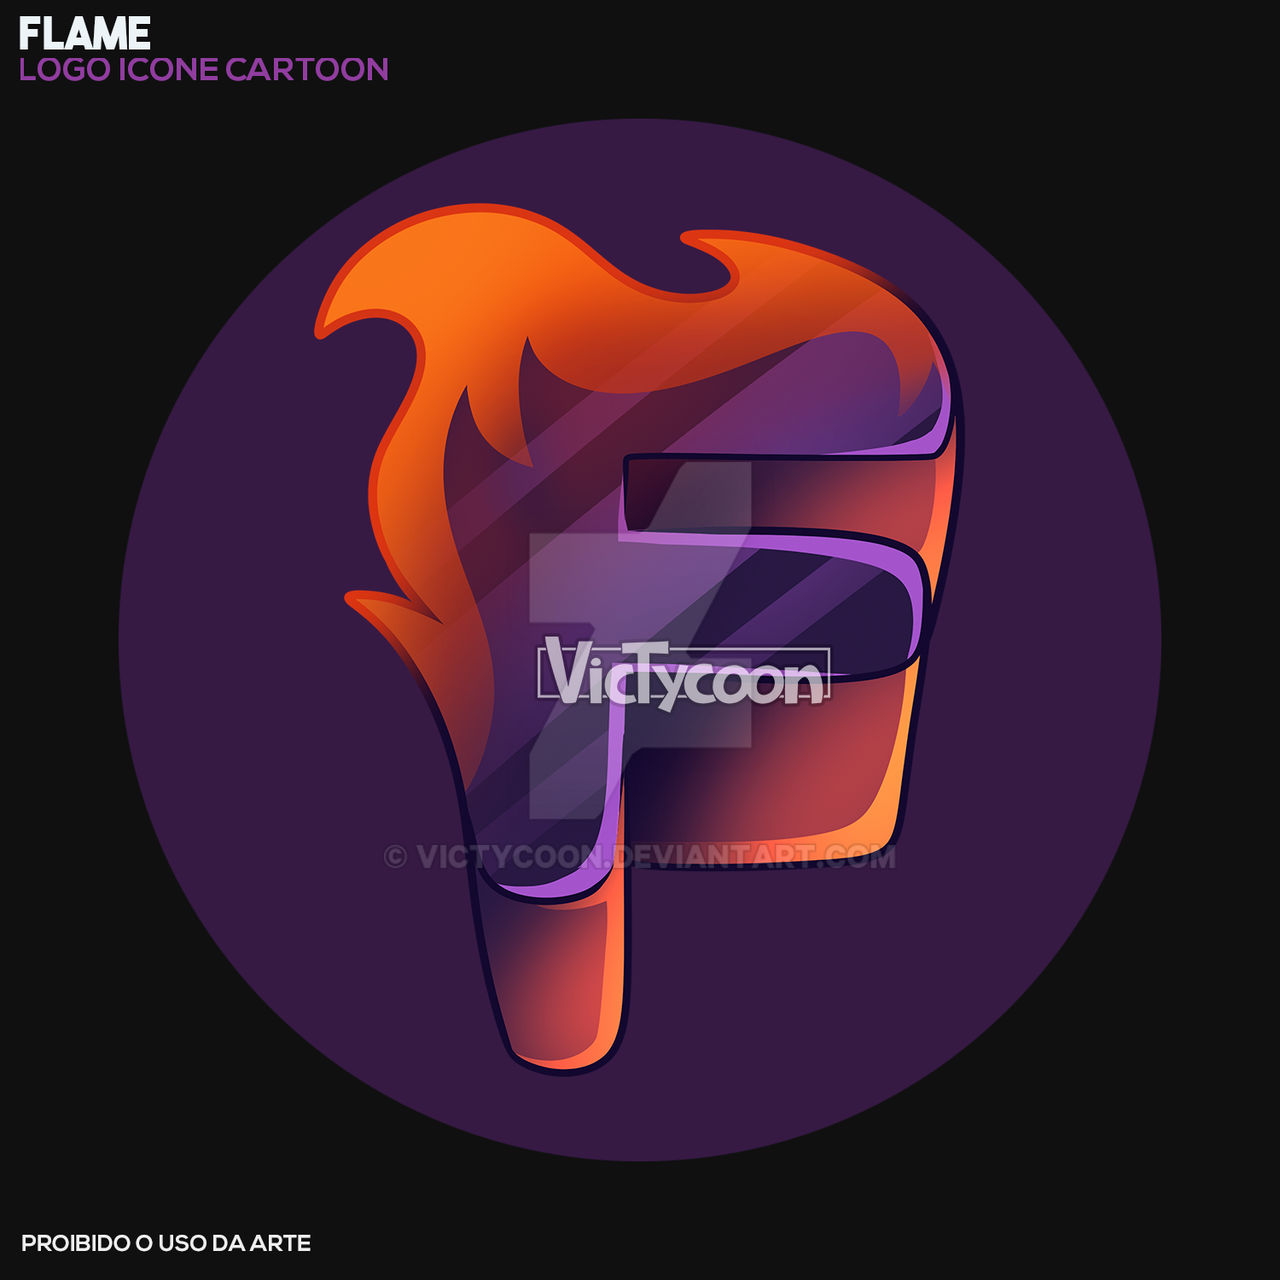 LOGO CARTOON - Flame (Minecraft Server) by VicTycoon on DeviantArt